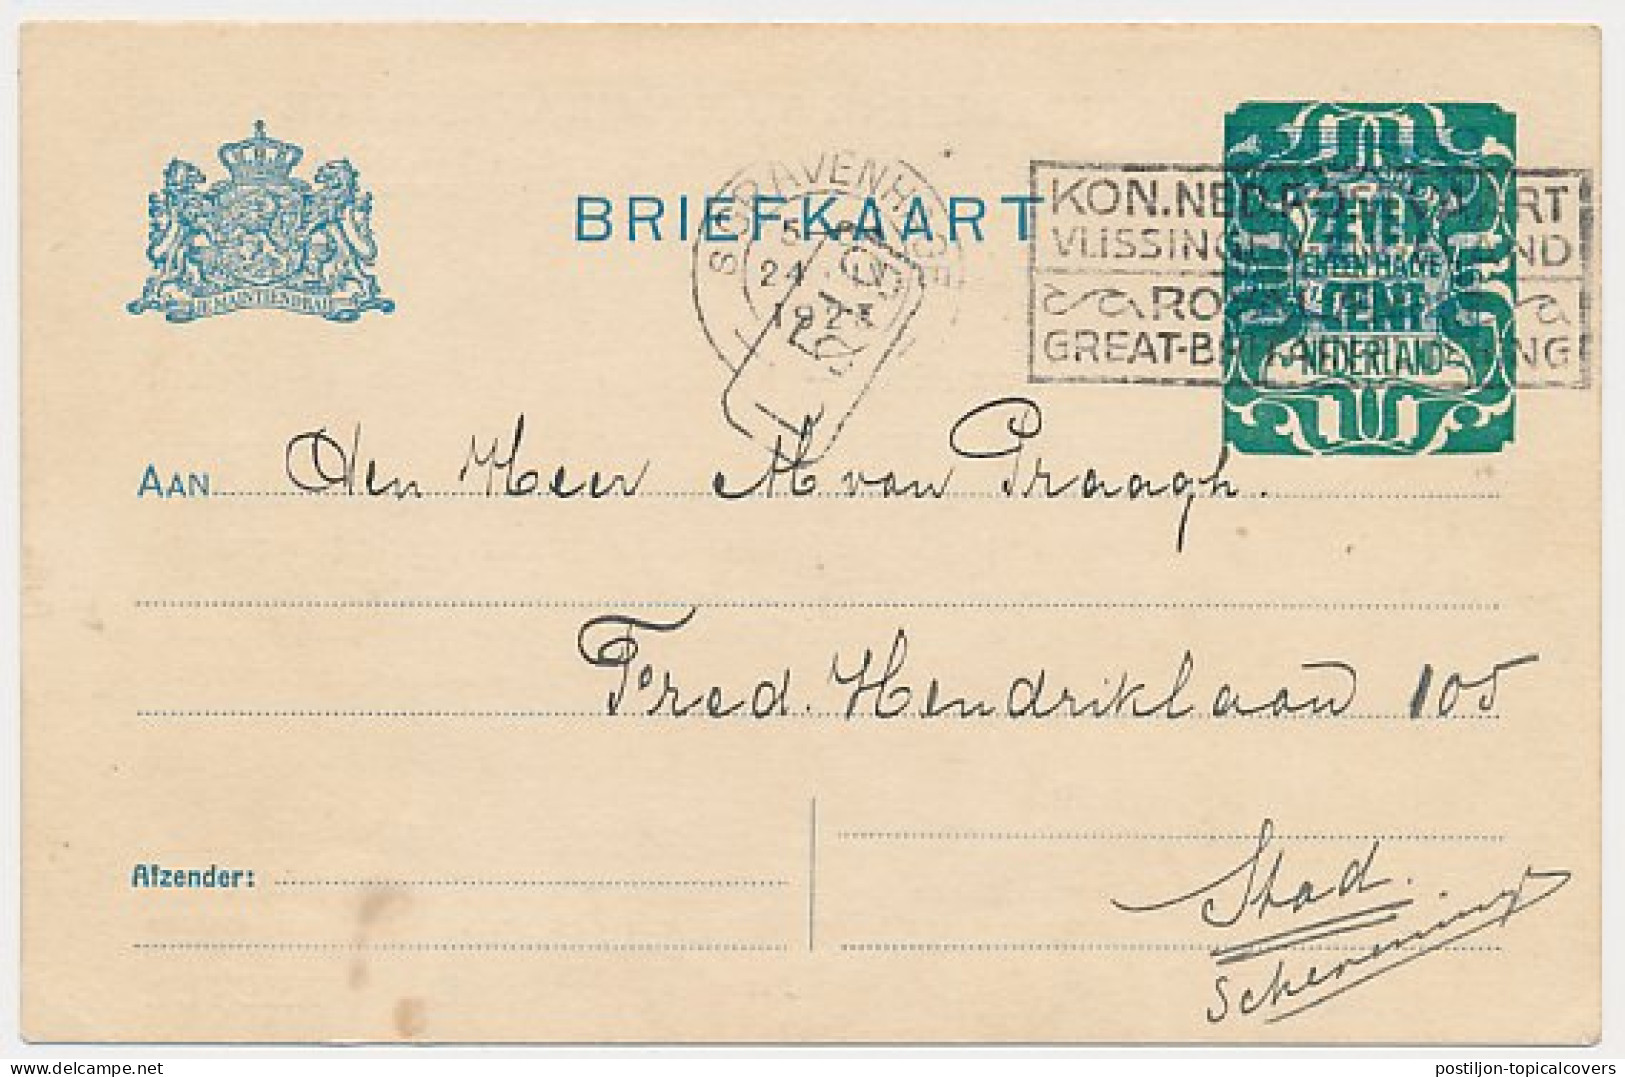 Briefkaart G. DW163-II-b - Duinwaterleiding S-Gravenhage 1923 - Interi Postali